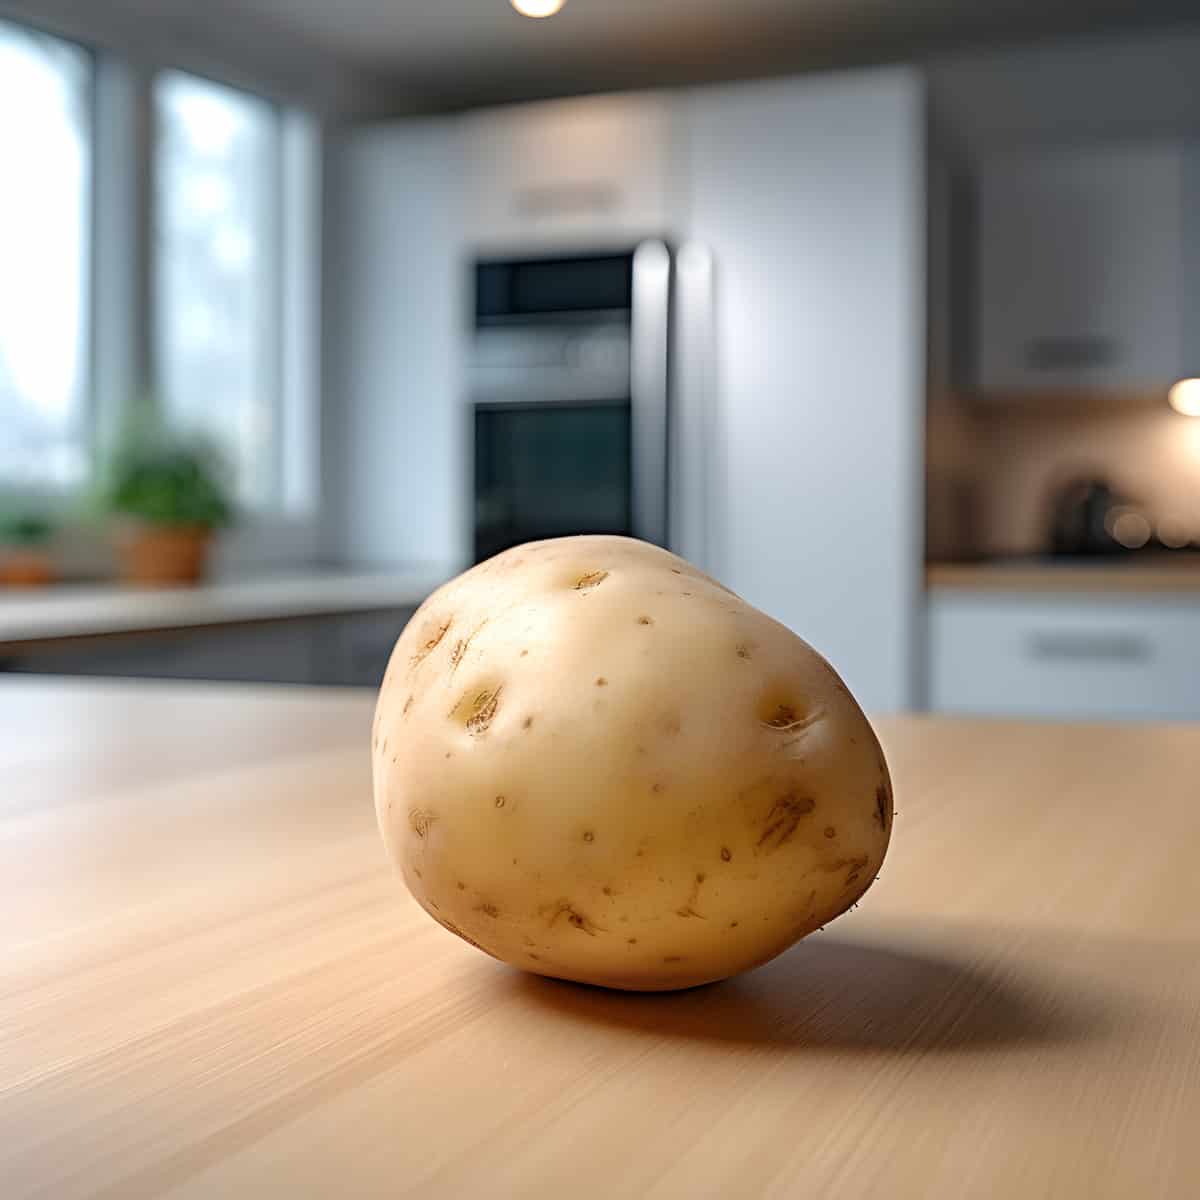 Norddeutsche Inseln Potatoes on a kitchen counter